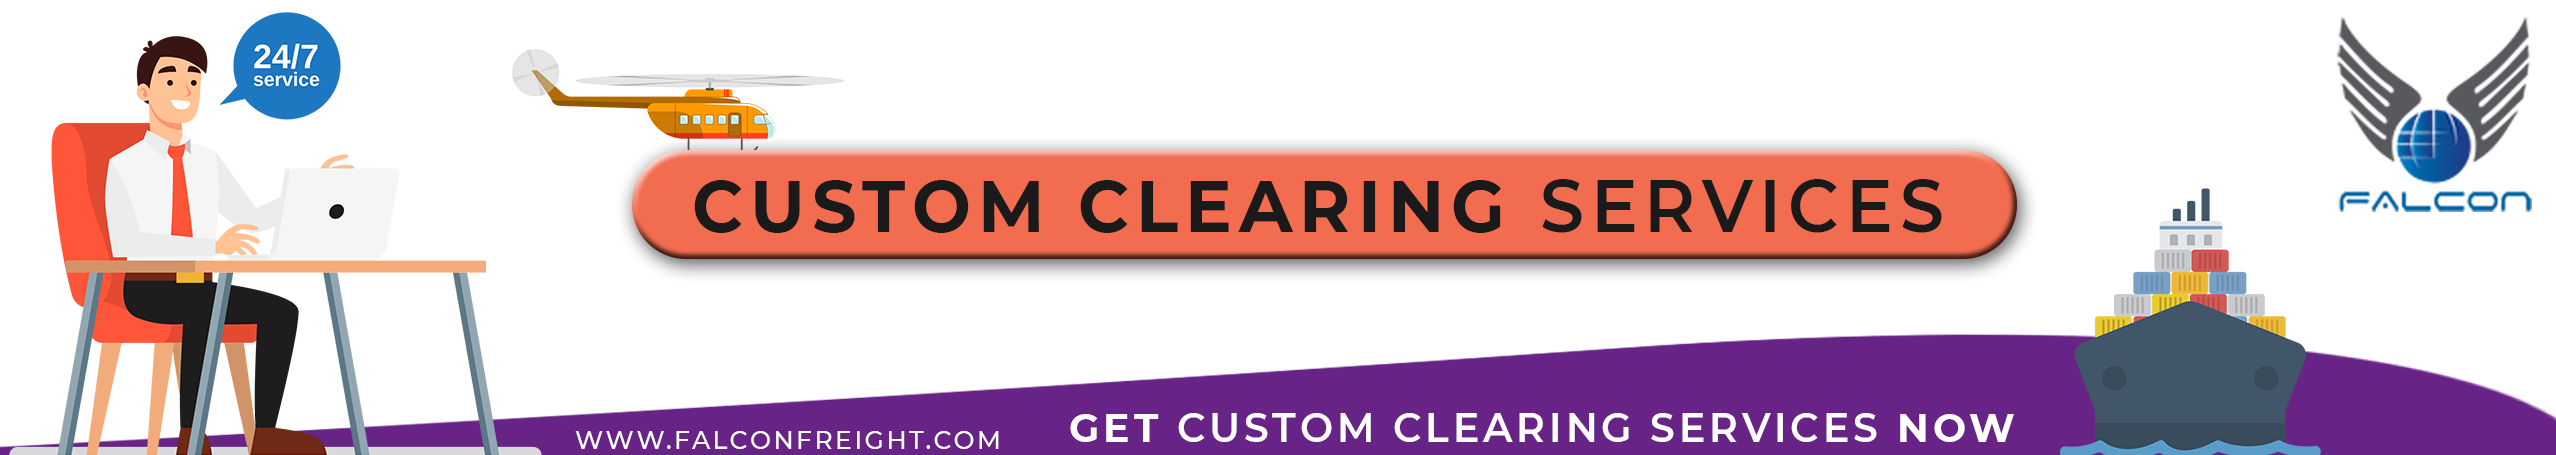 get custom clearance now